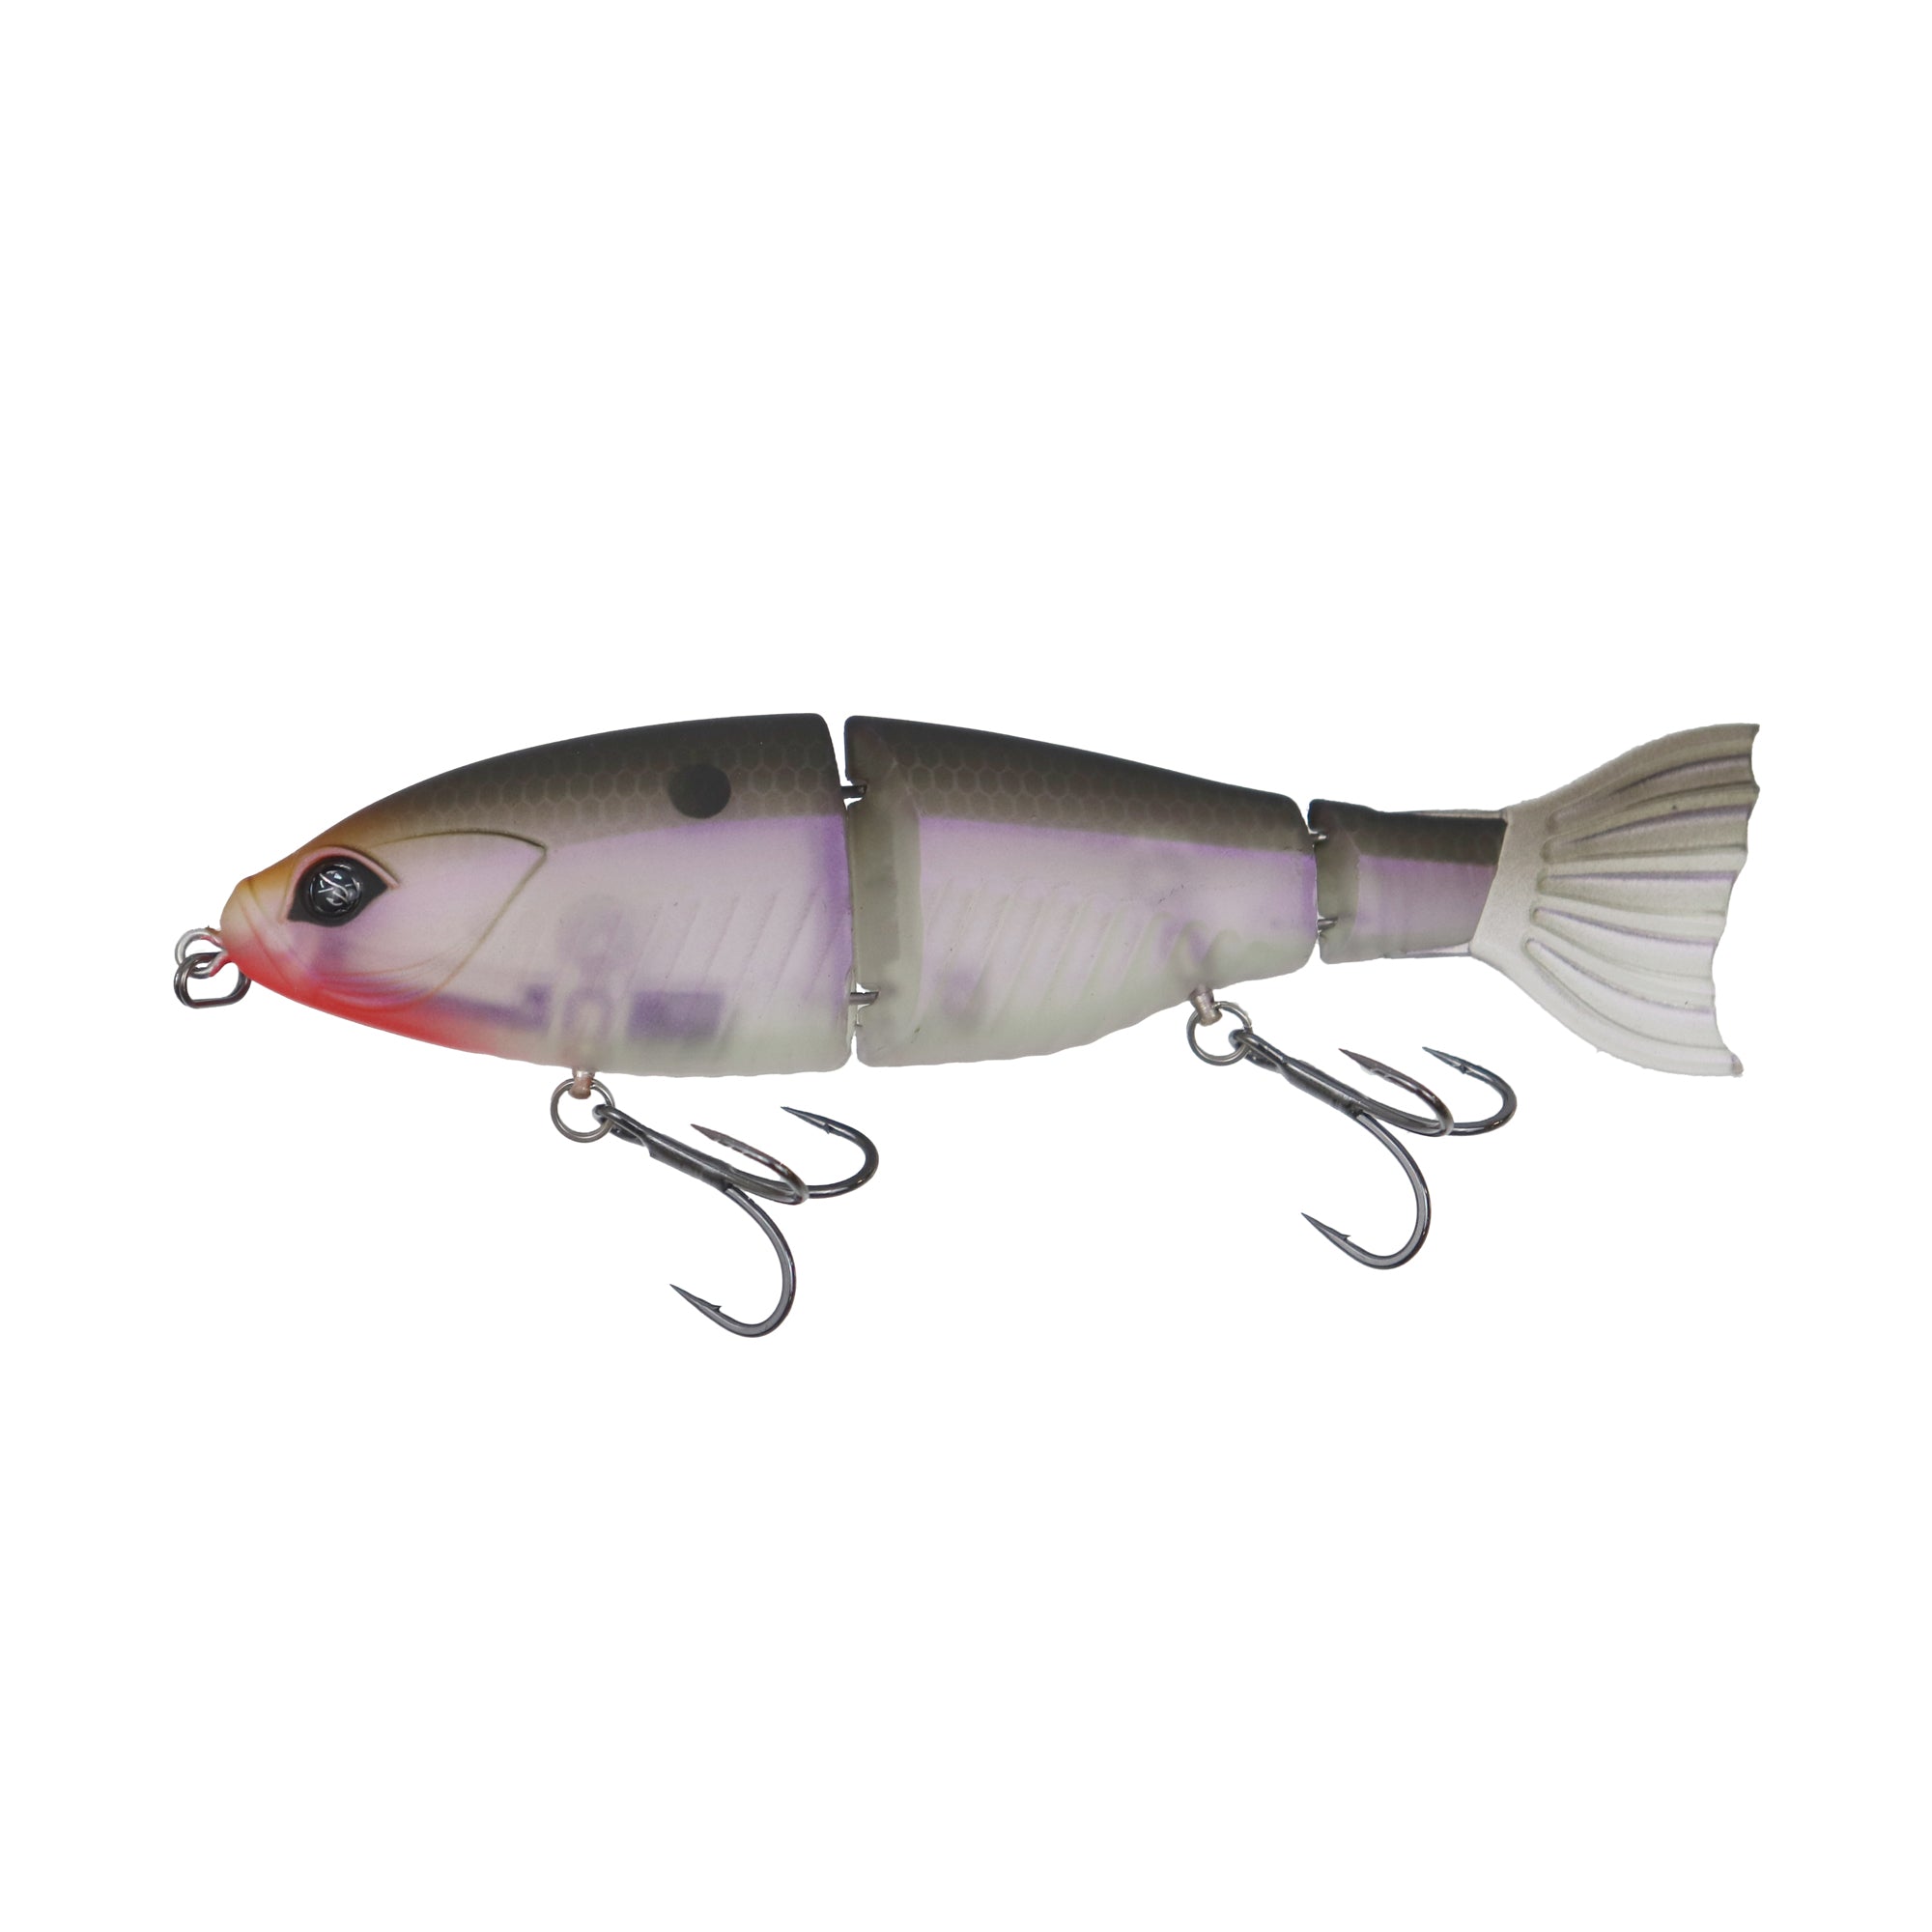 Googan Squad Contender Jr. Jointed Swimbait 4.5 / 1oz (Select Color) -  Fishingurus Angler's International Resources